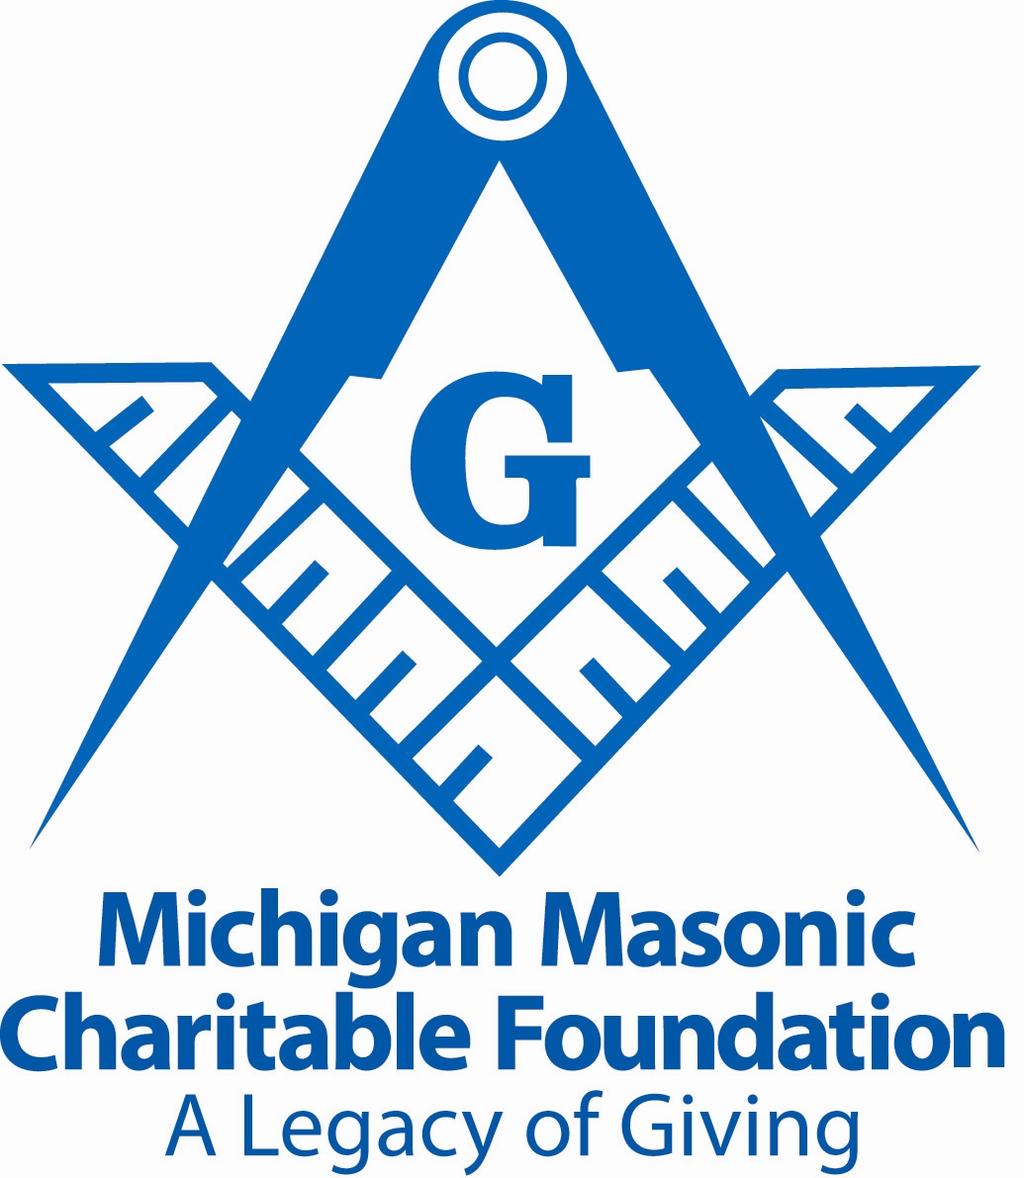 Michigan Masonic Charitable Foundation in